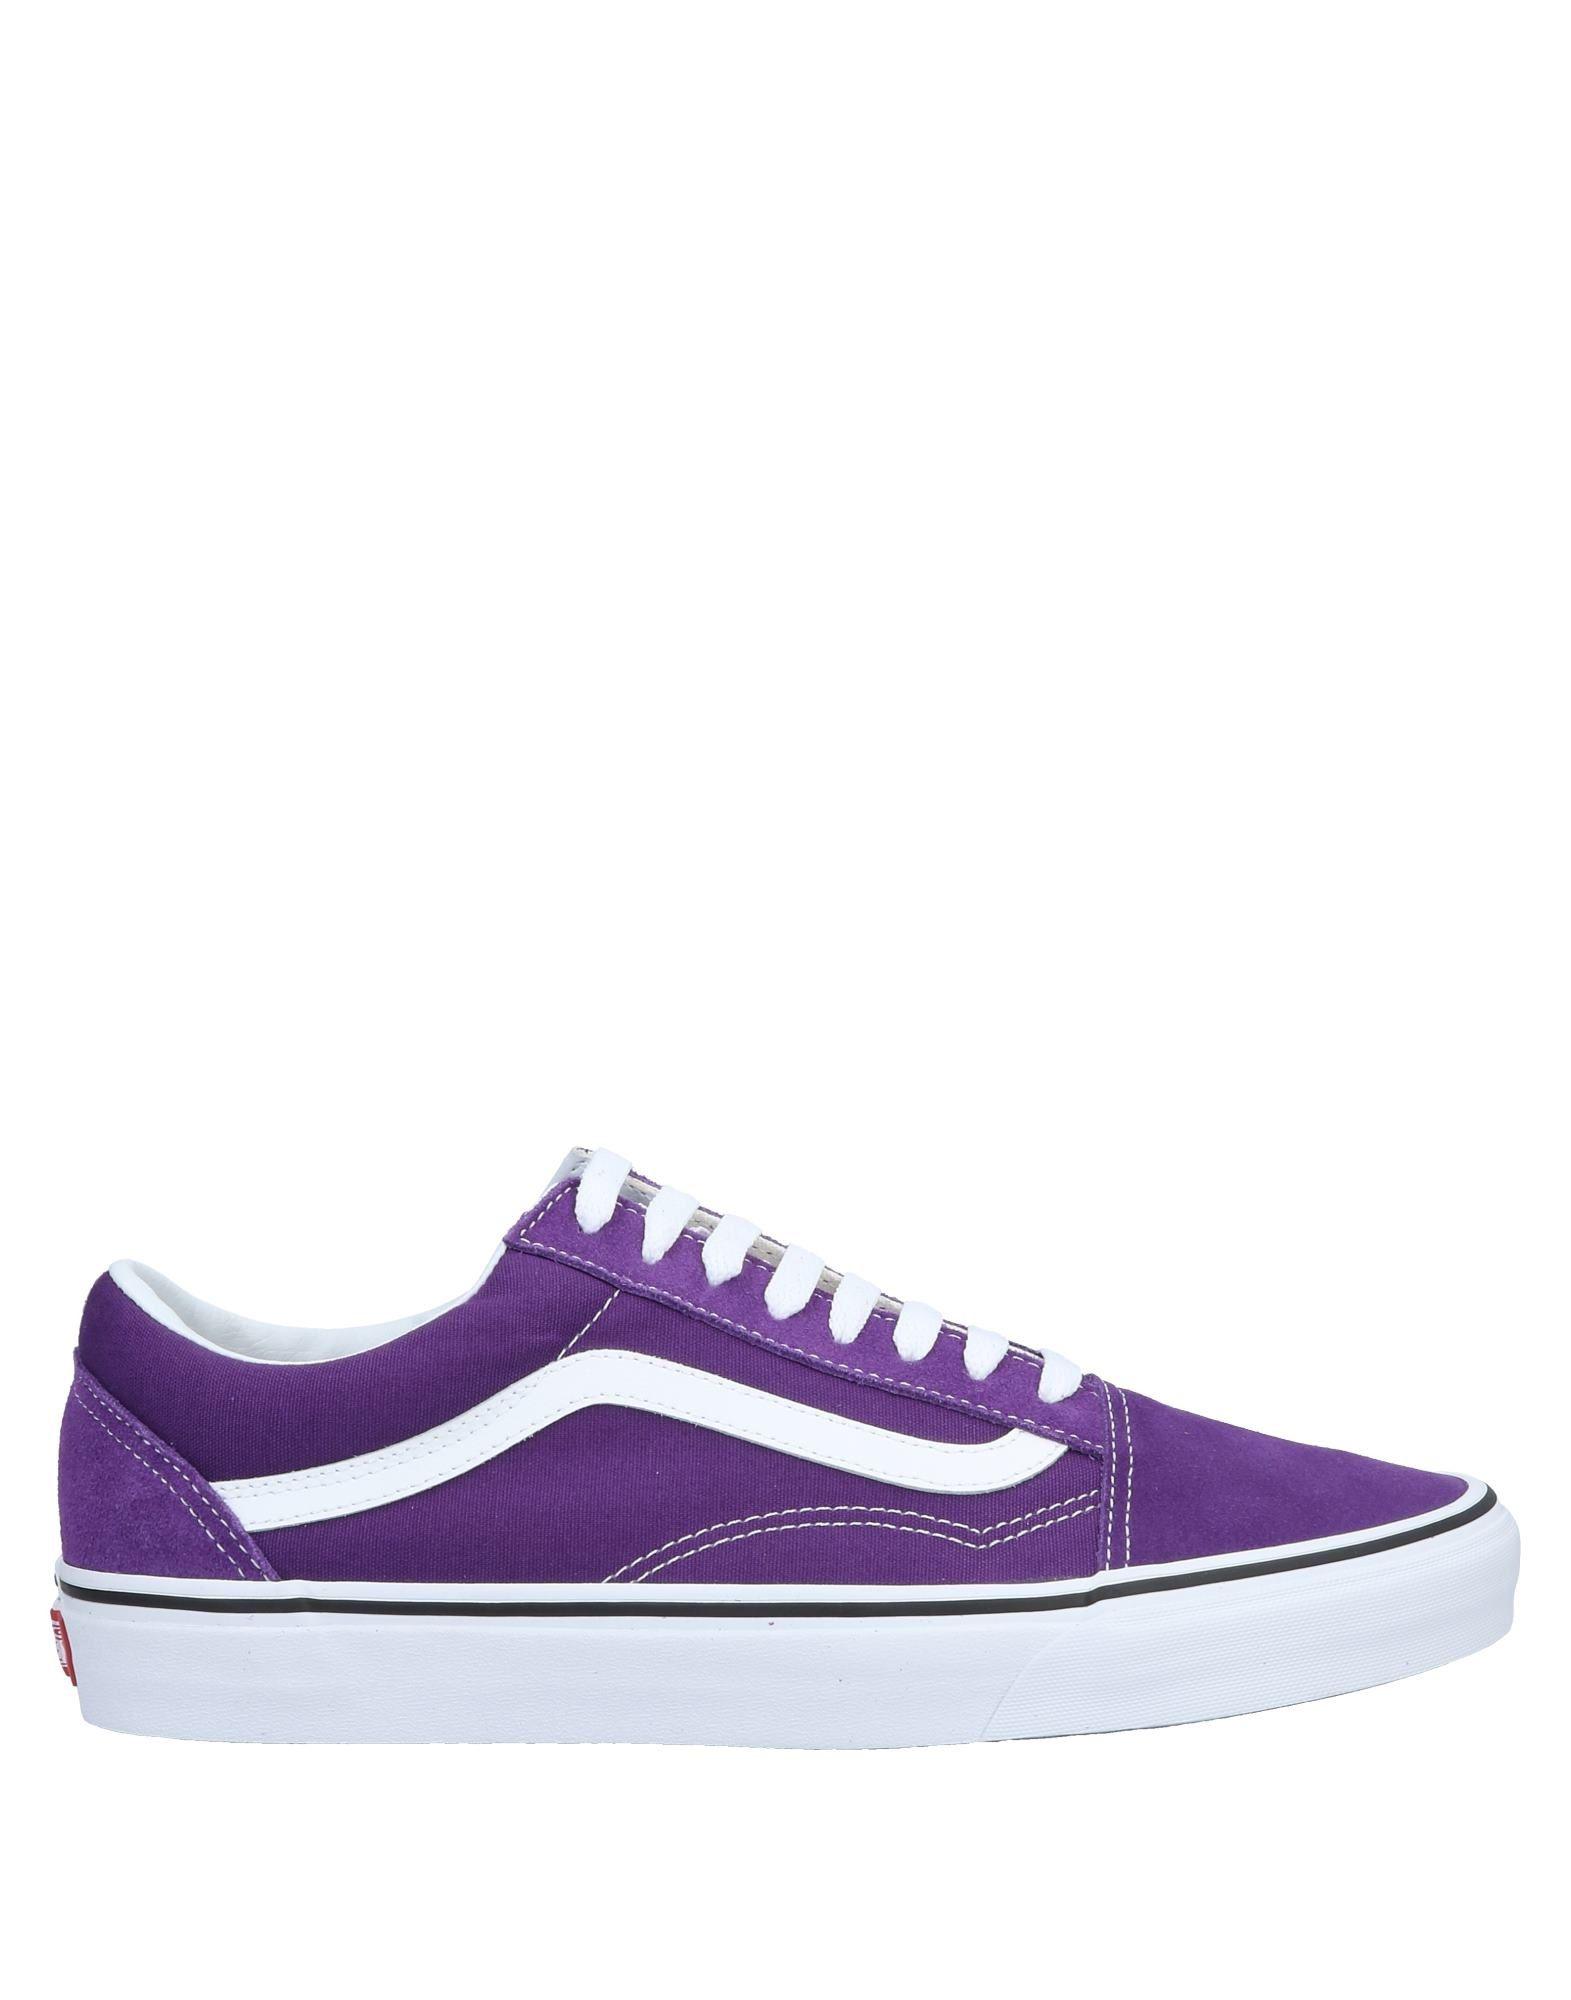 white and purple vans